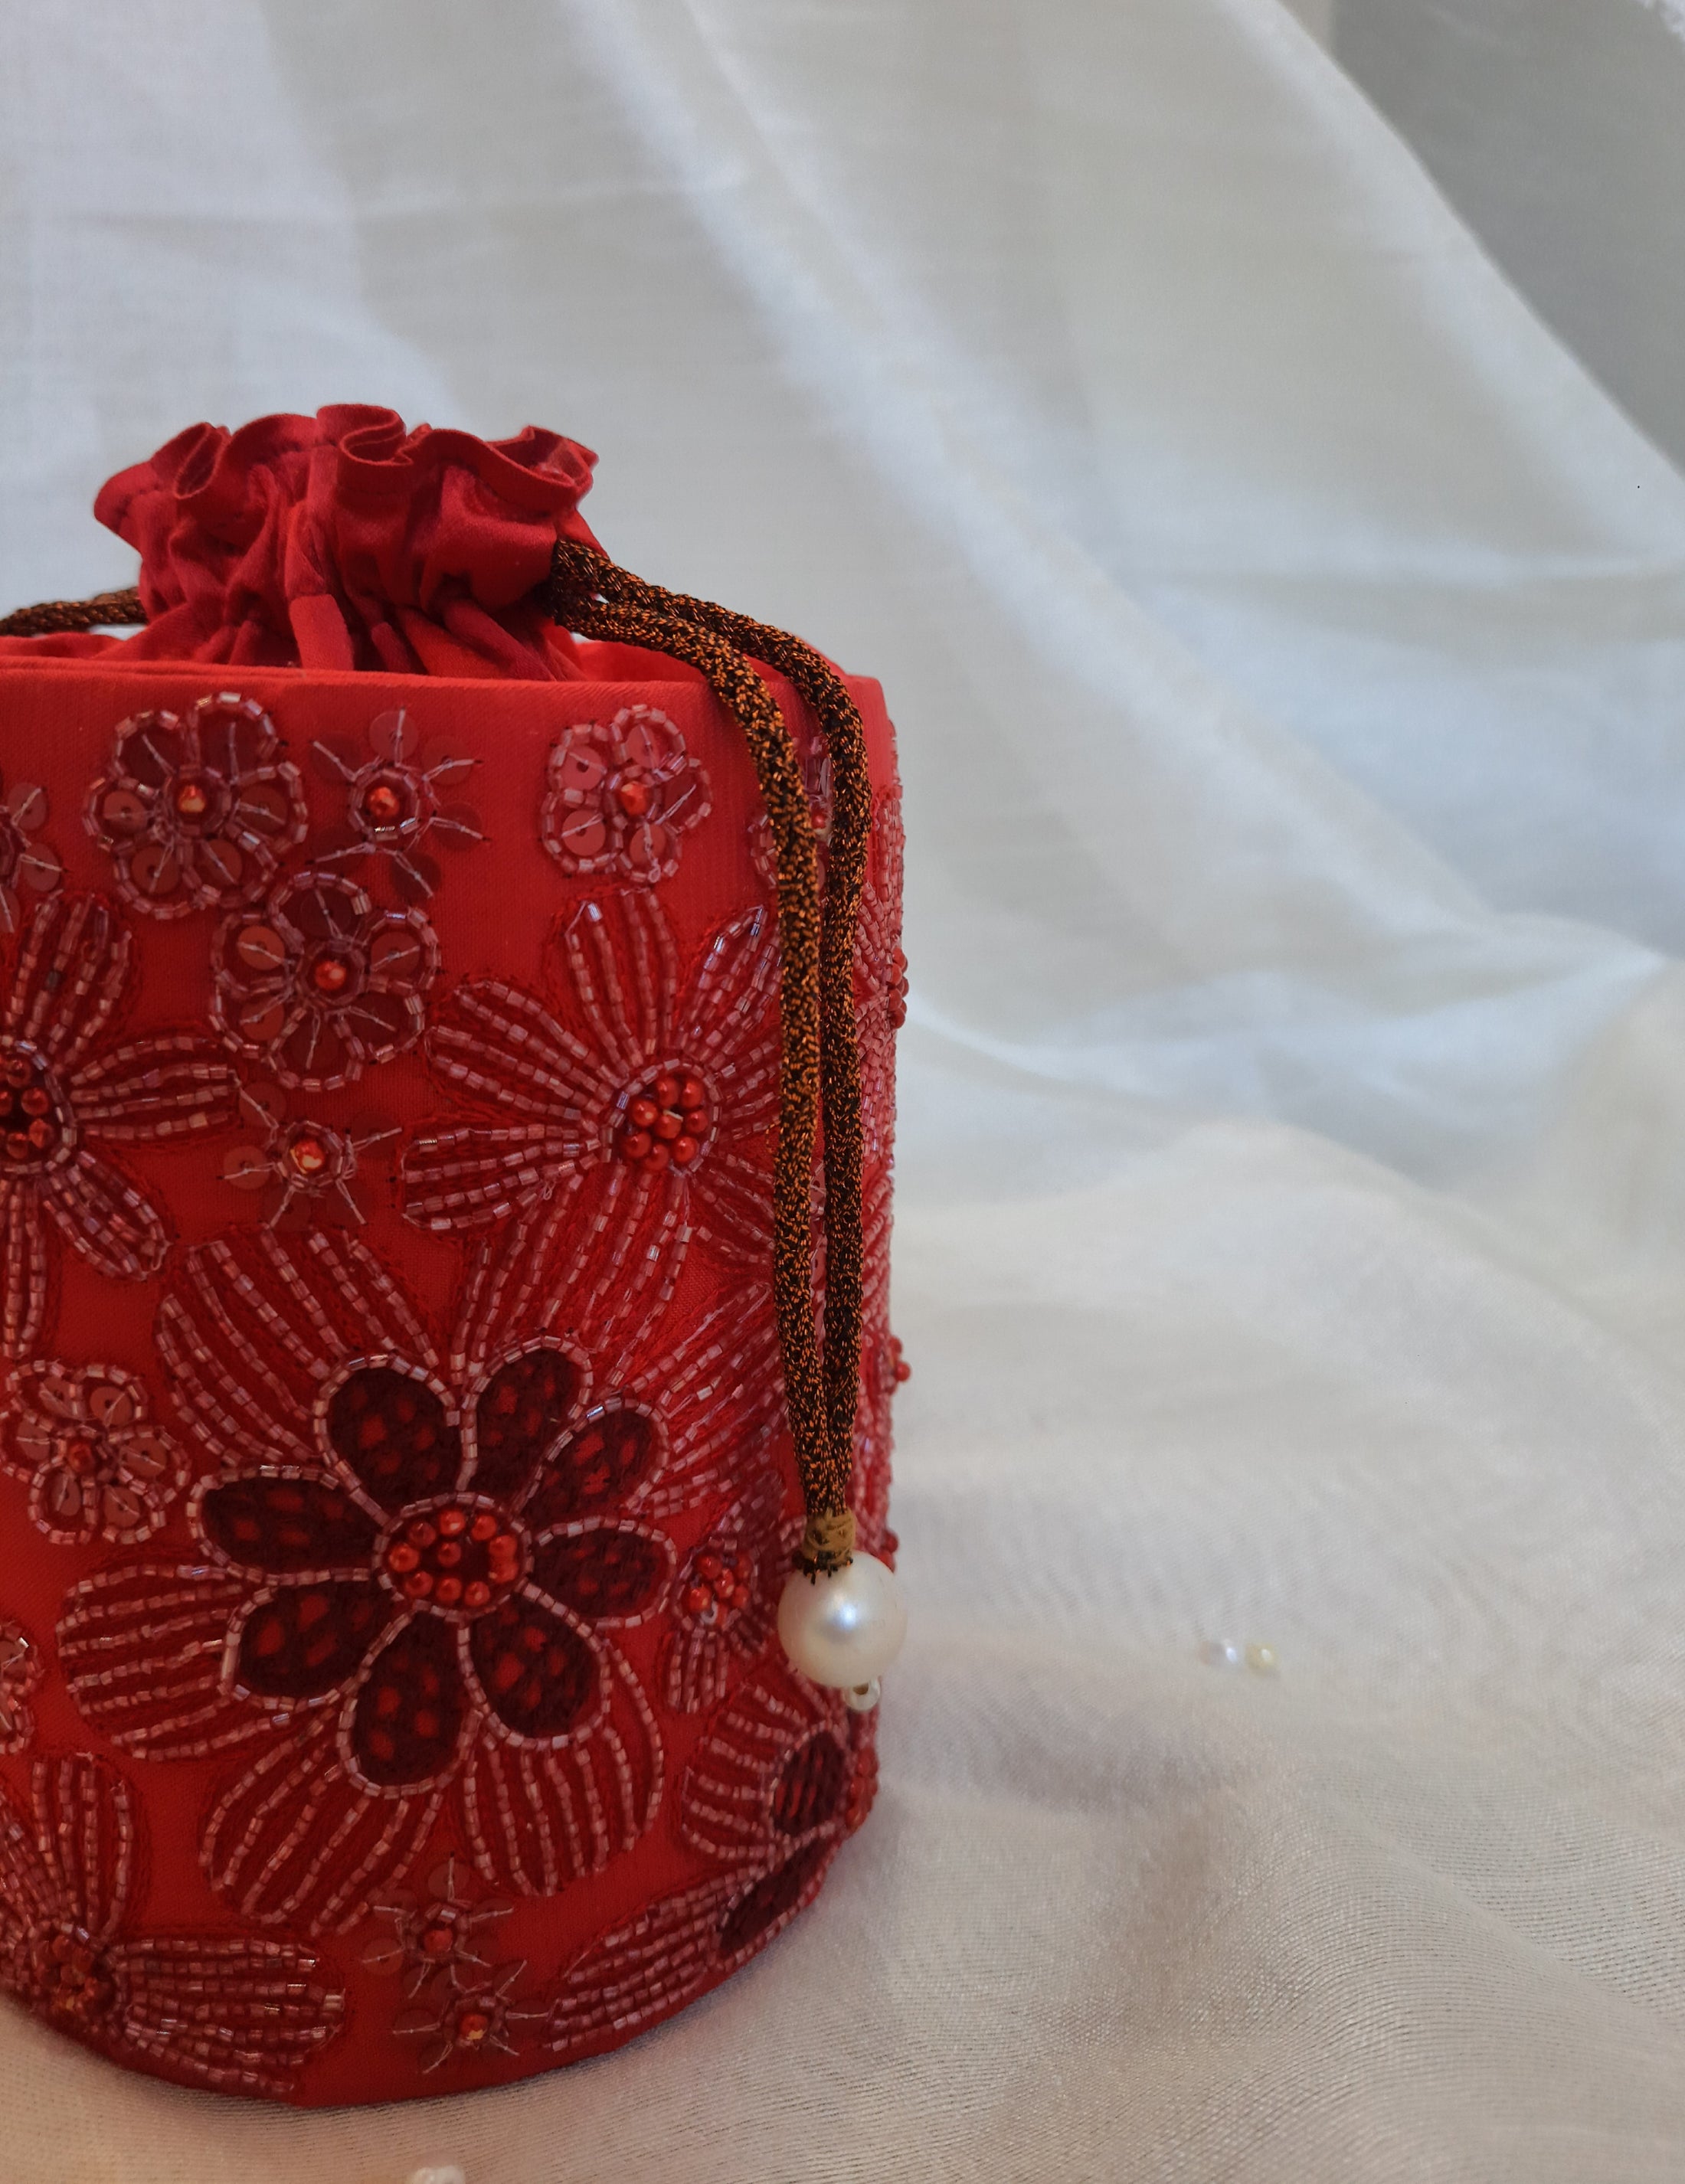 Elixir Floral Scarlet Circular Bag